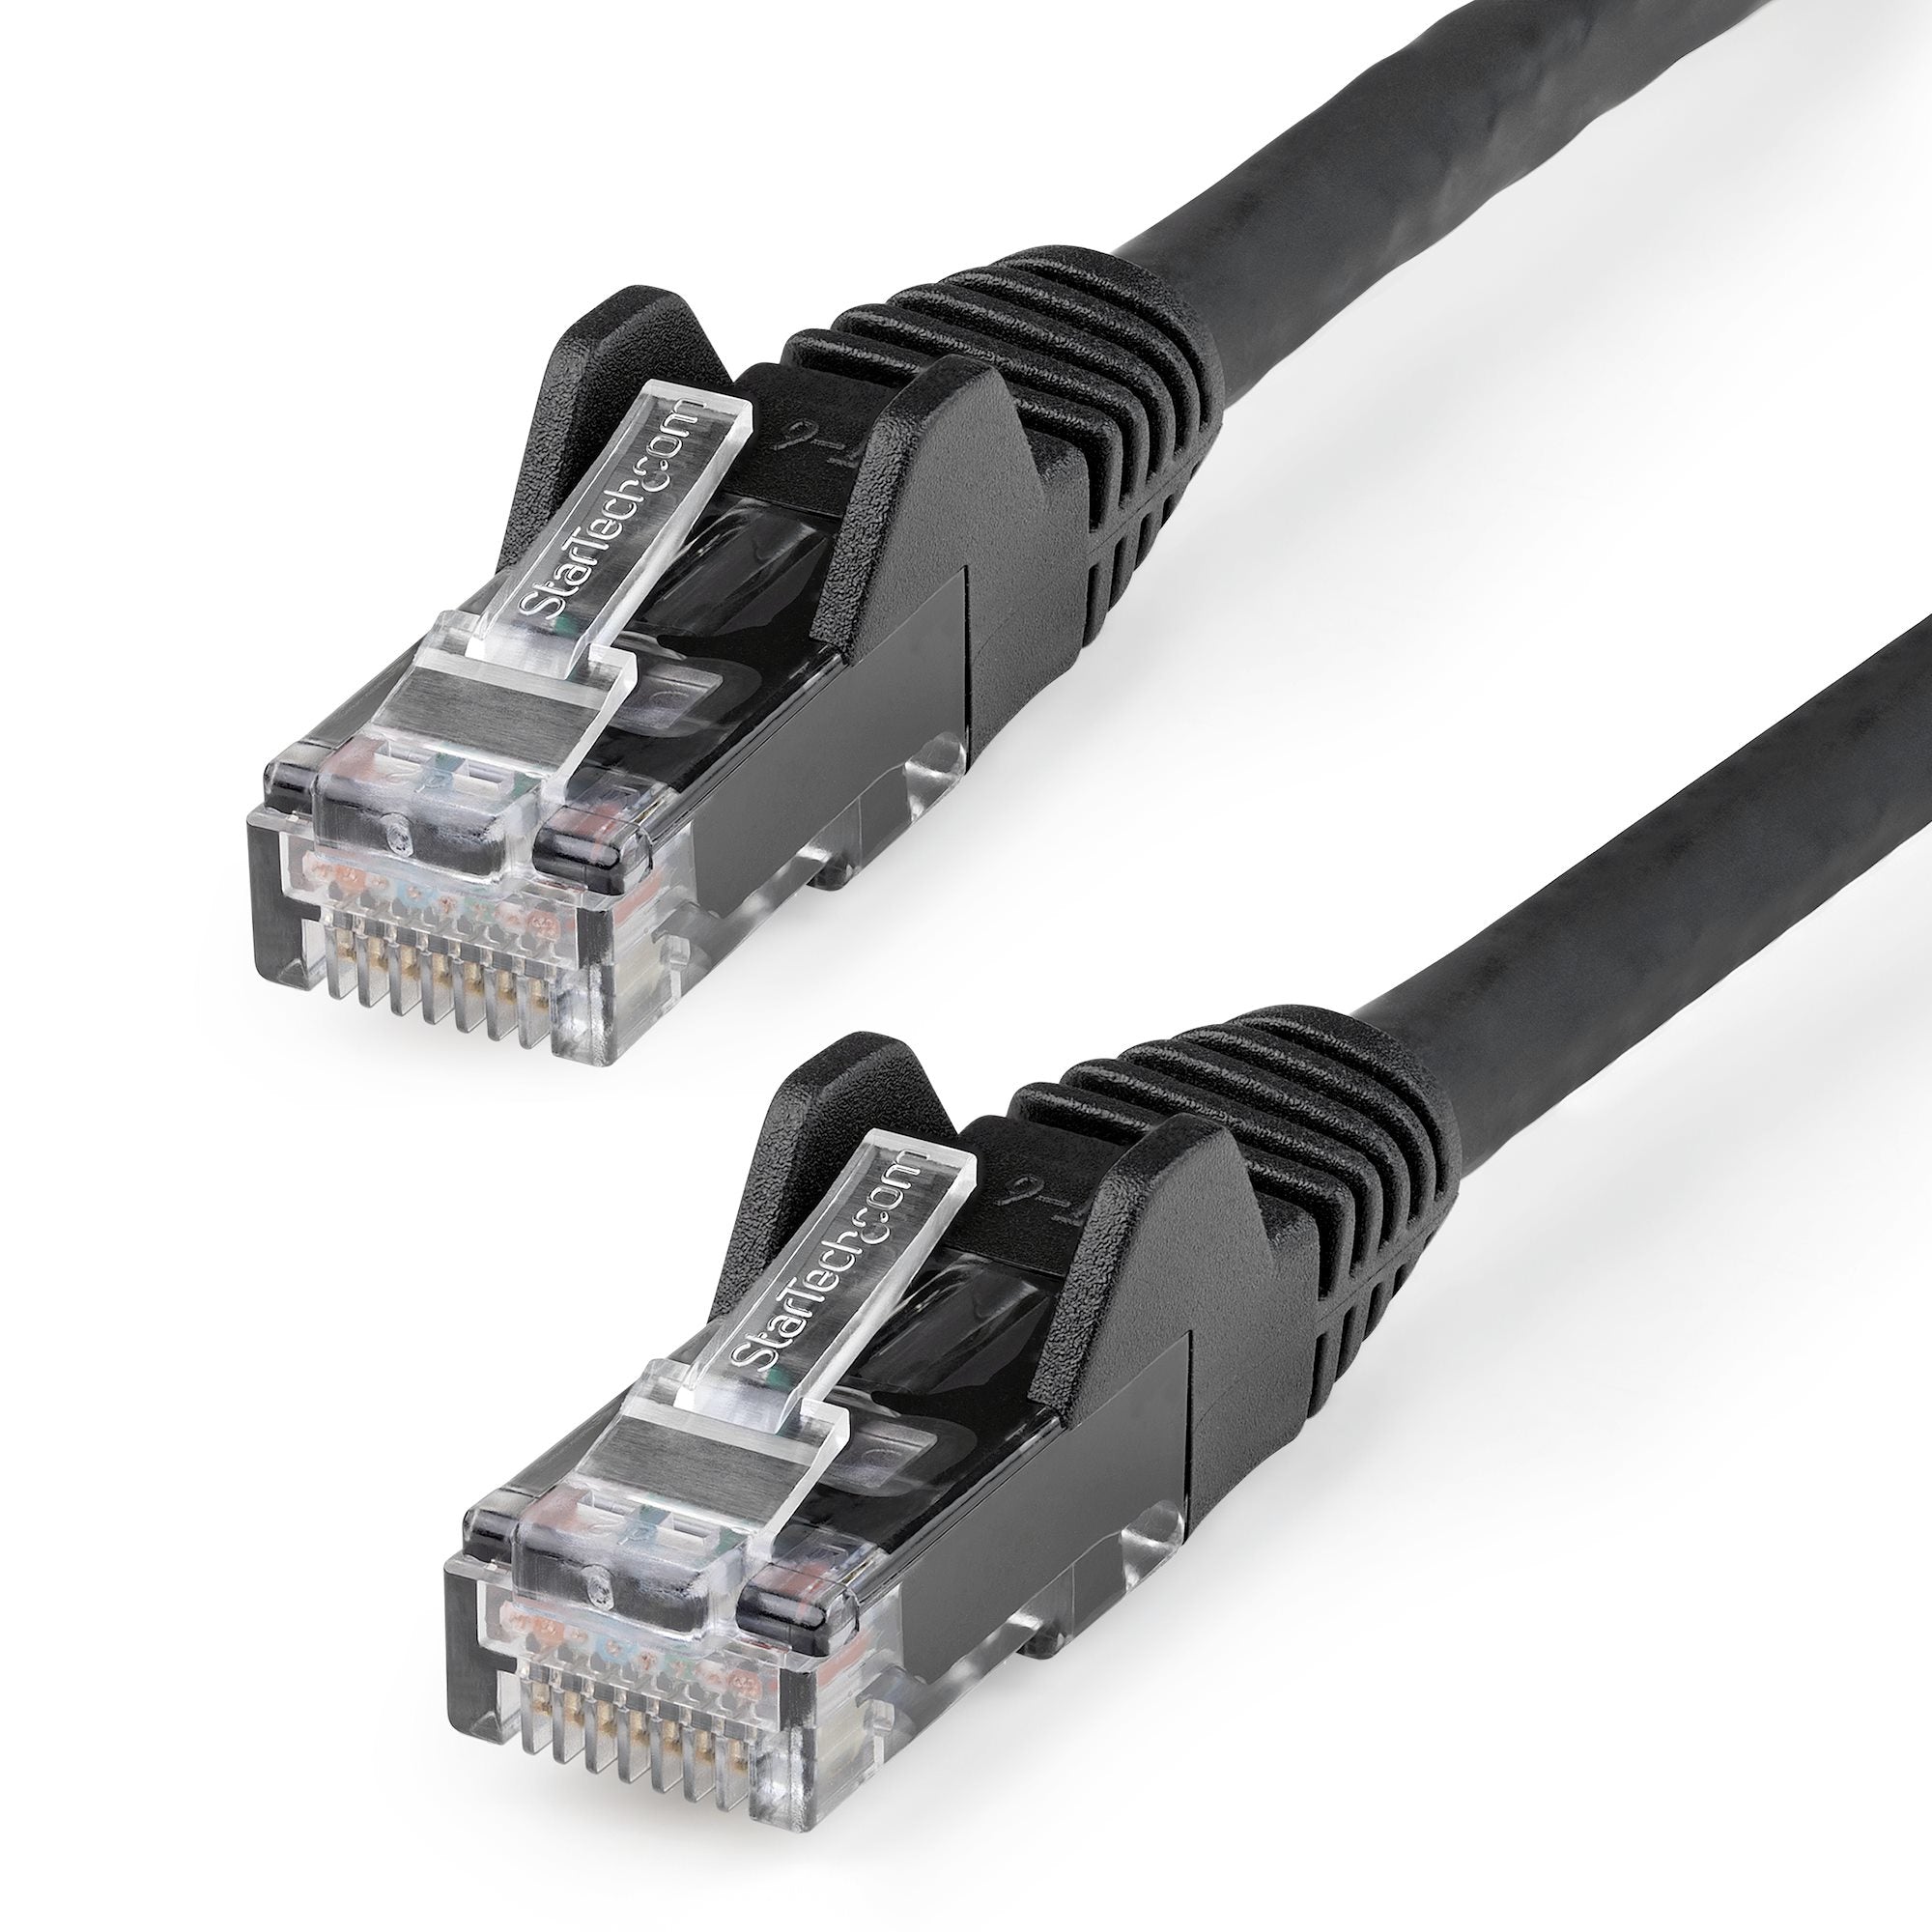 StarTech.com 10m CAT6 Ethernet Cable - LSZH (Low Smoke Zero Halogen) - 10 Gigabit 650MHz 100W PoE RJ45 10GbE UTP Network Patch Cord Snagless with Strain Relief - Black, CAT 6, ETL Verified, 24AWG